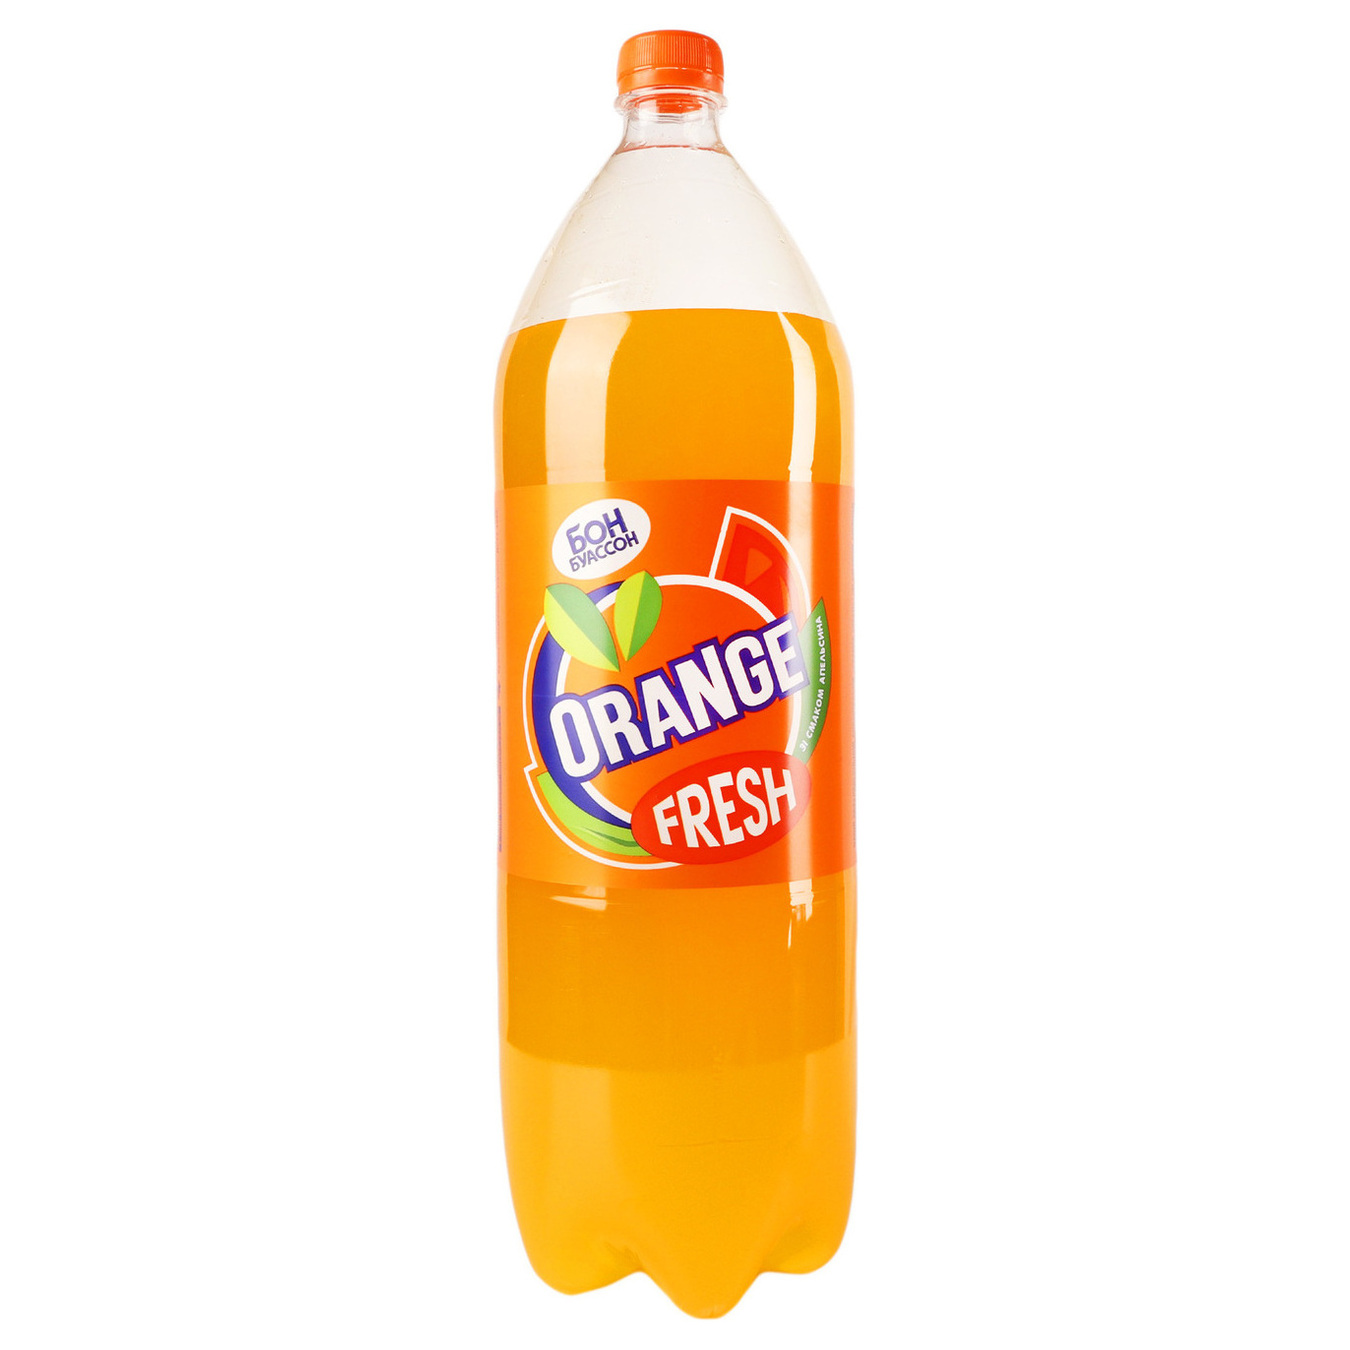 Bon Boisson Orange Fresh non-alcoholic strongly carbonated drink 2l